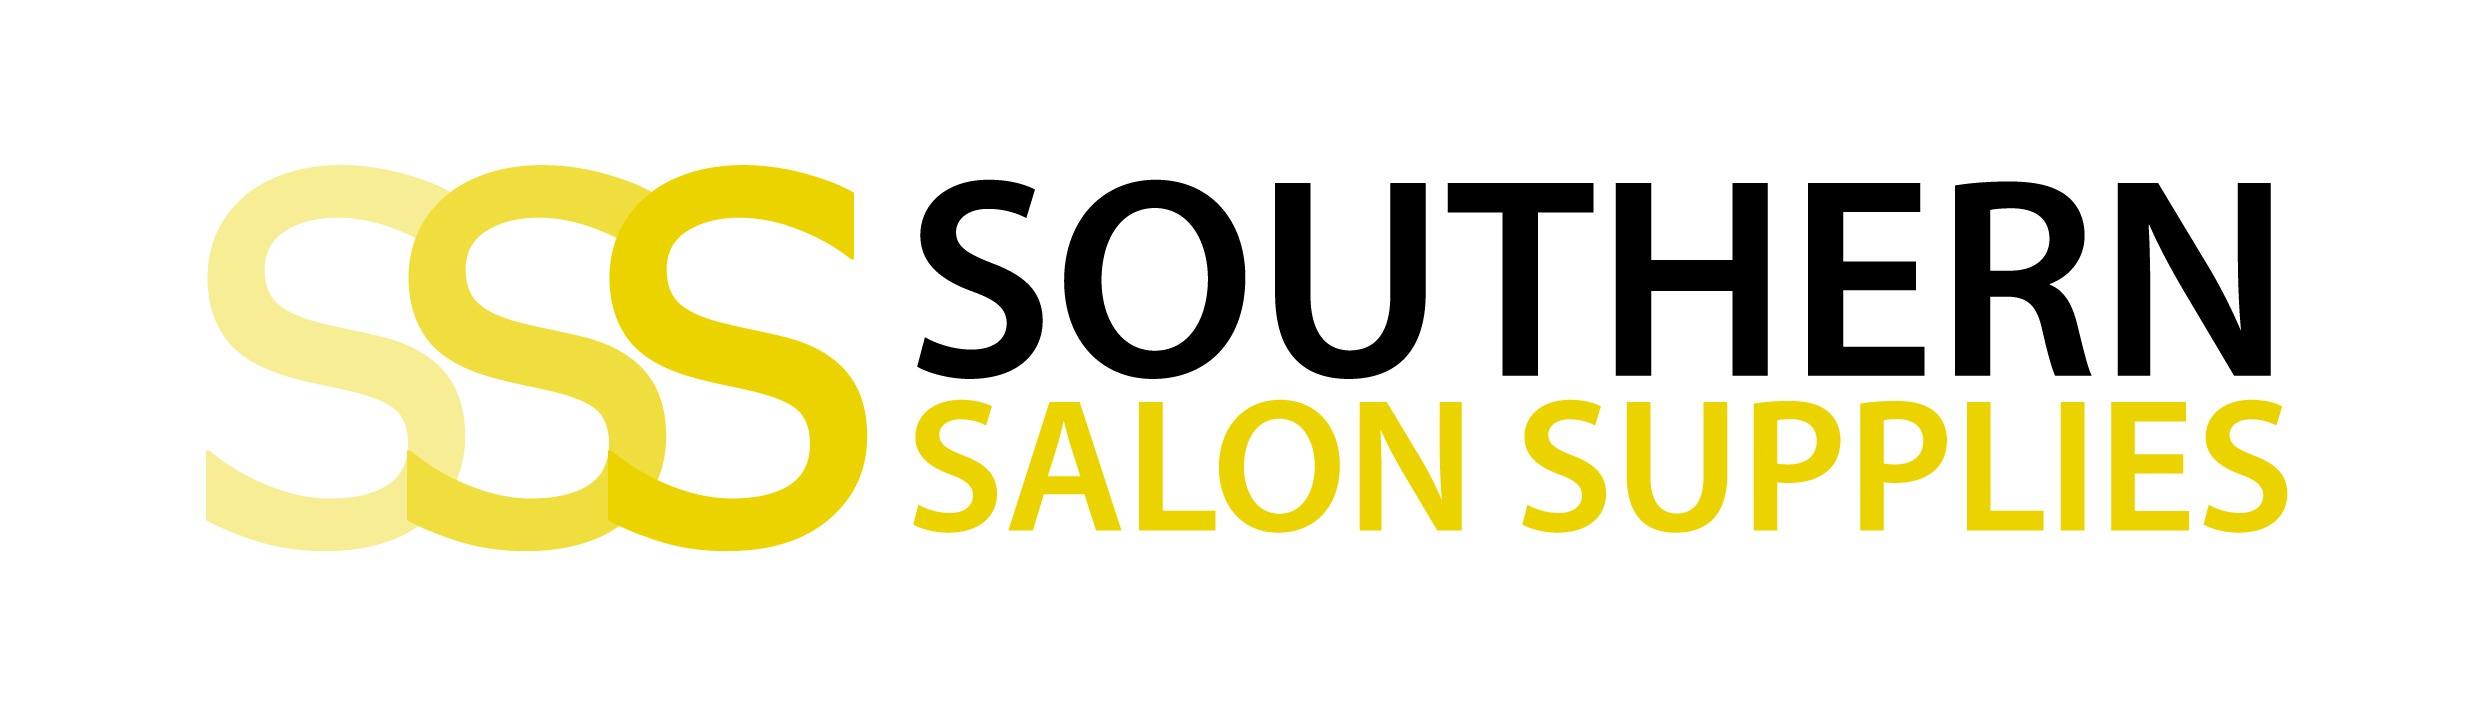 Southern Salon Supplies Credit Accounts Logo